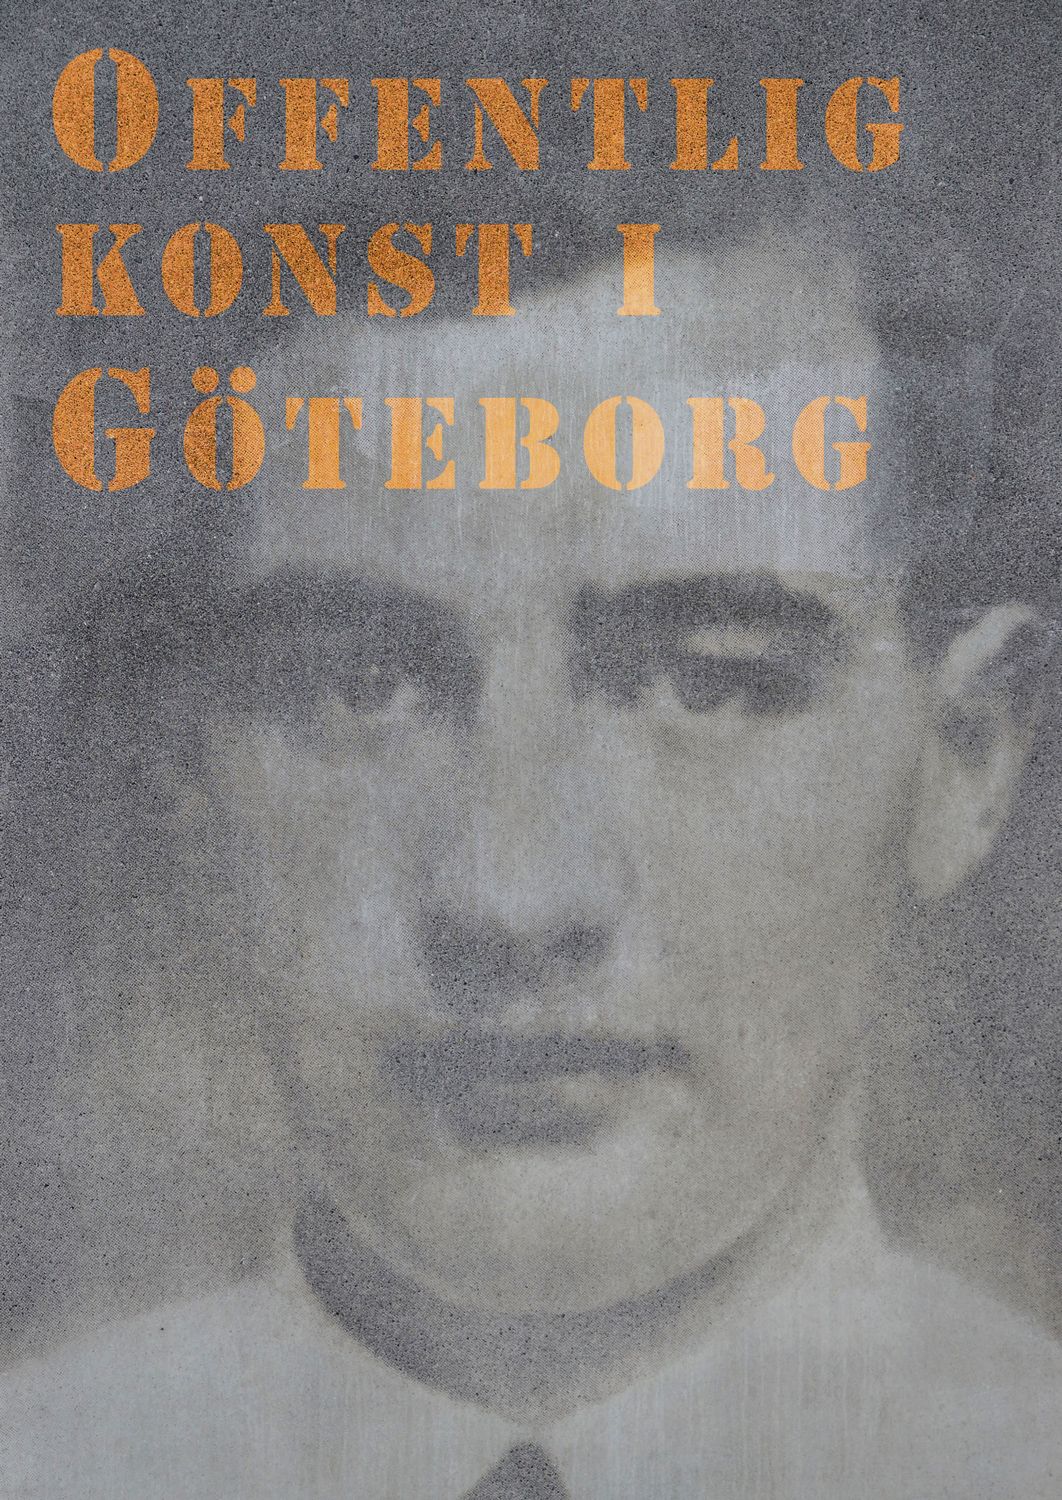 Offentlig konst i Göteborg, eBook by Mikael Mosesson